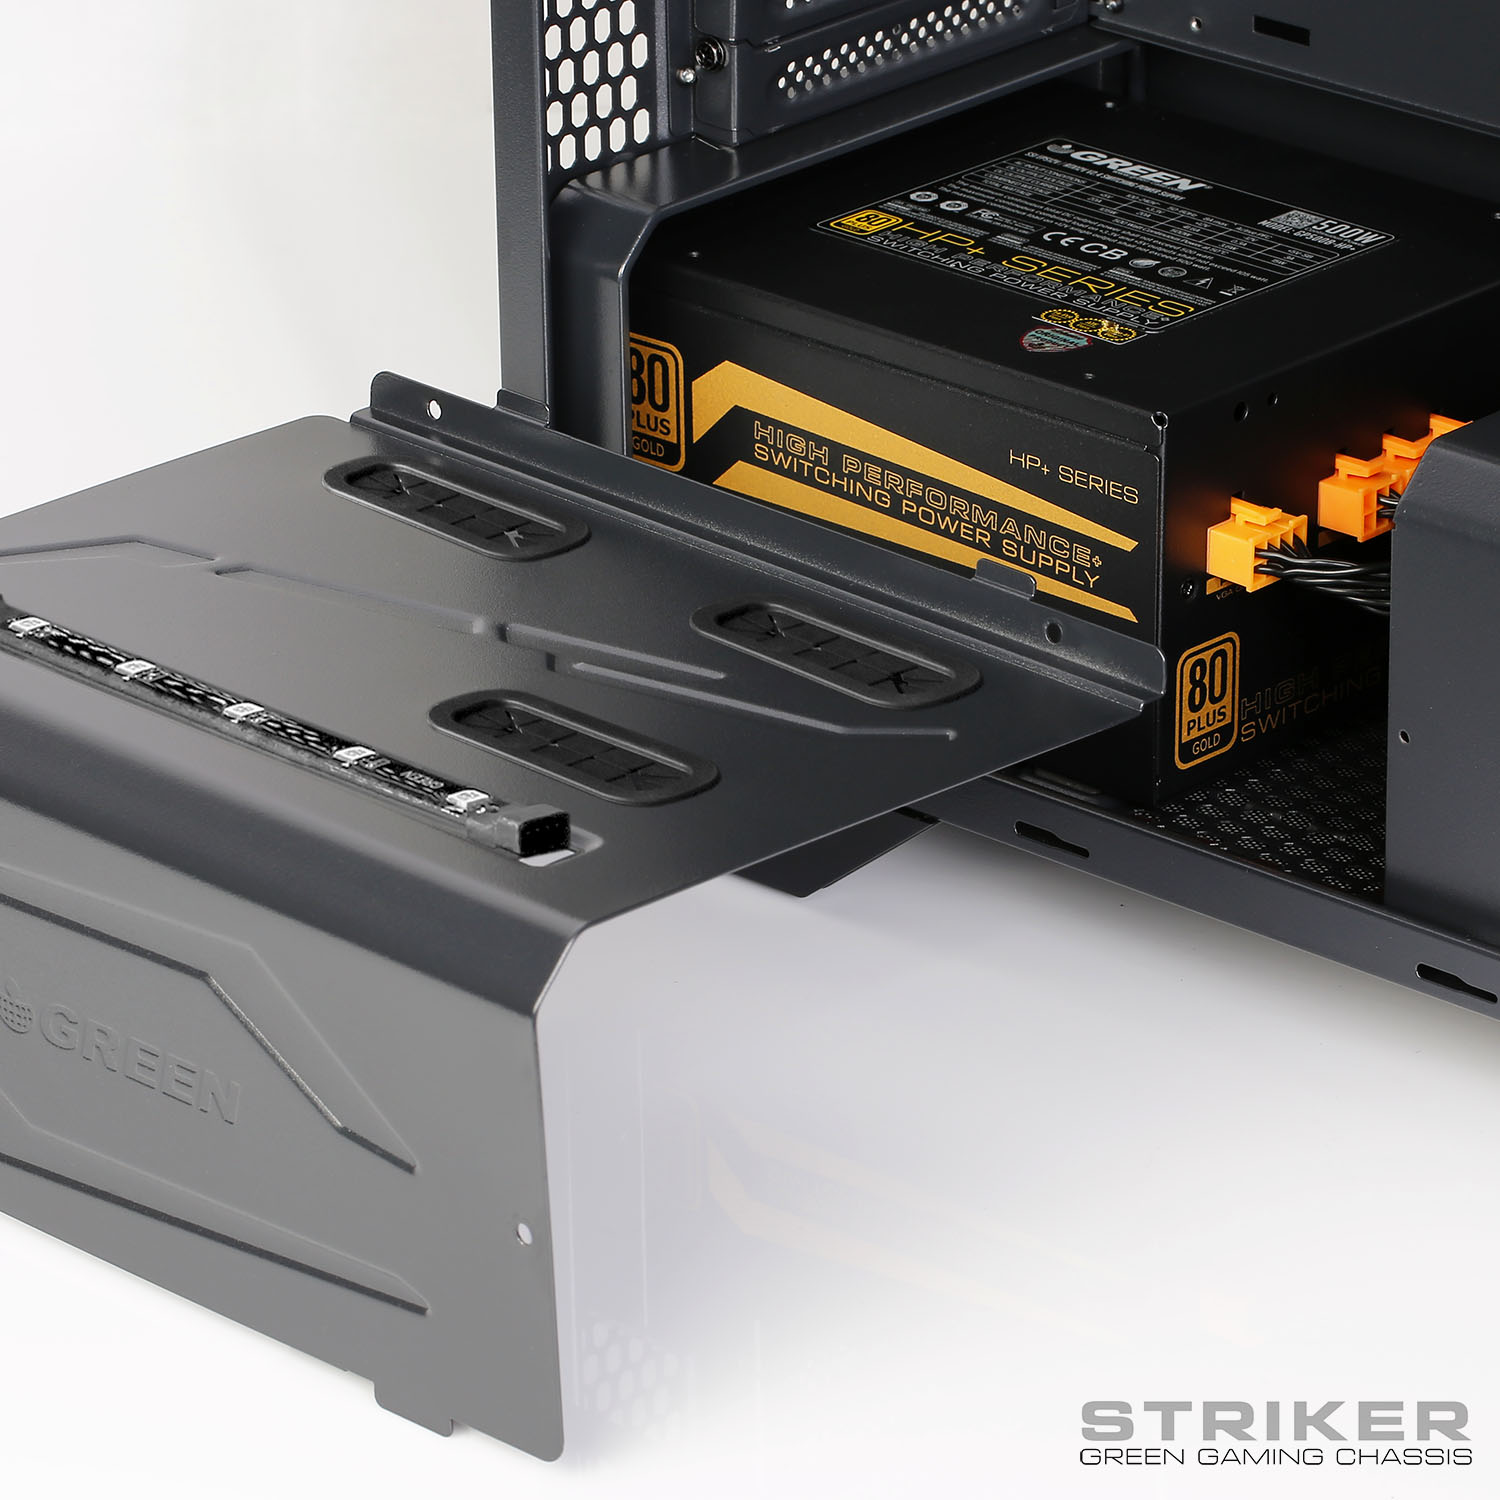 کیس گیم استرایکر Striker Gaming Chassis with USB Type-C